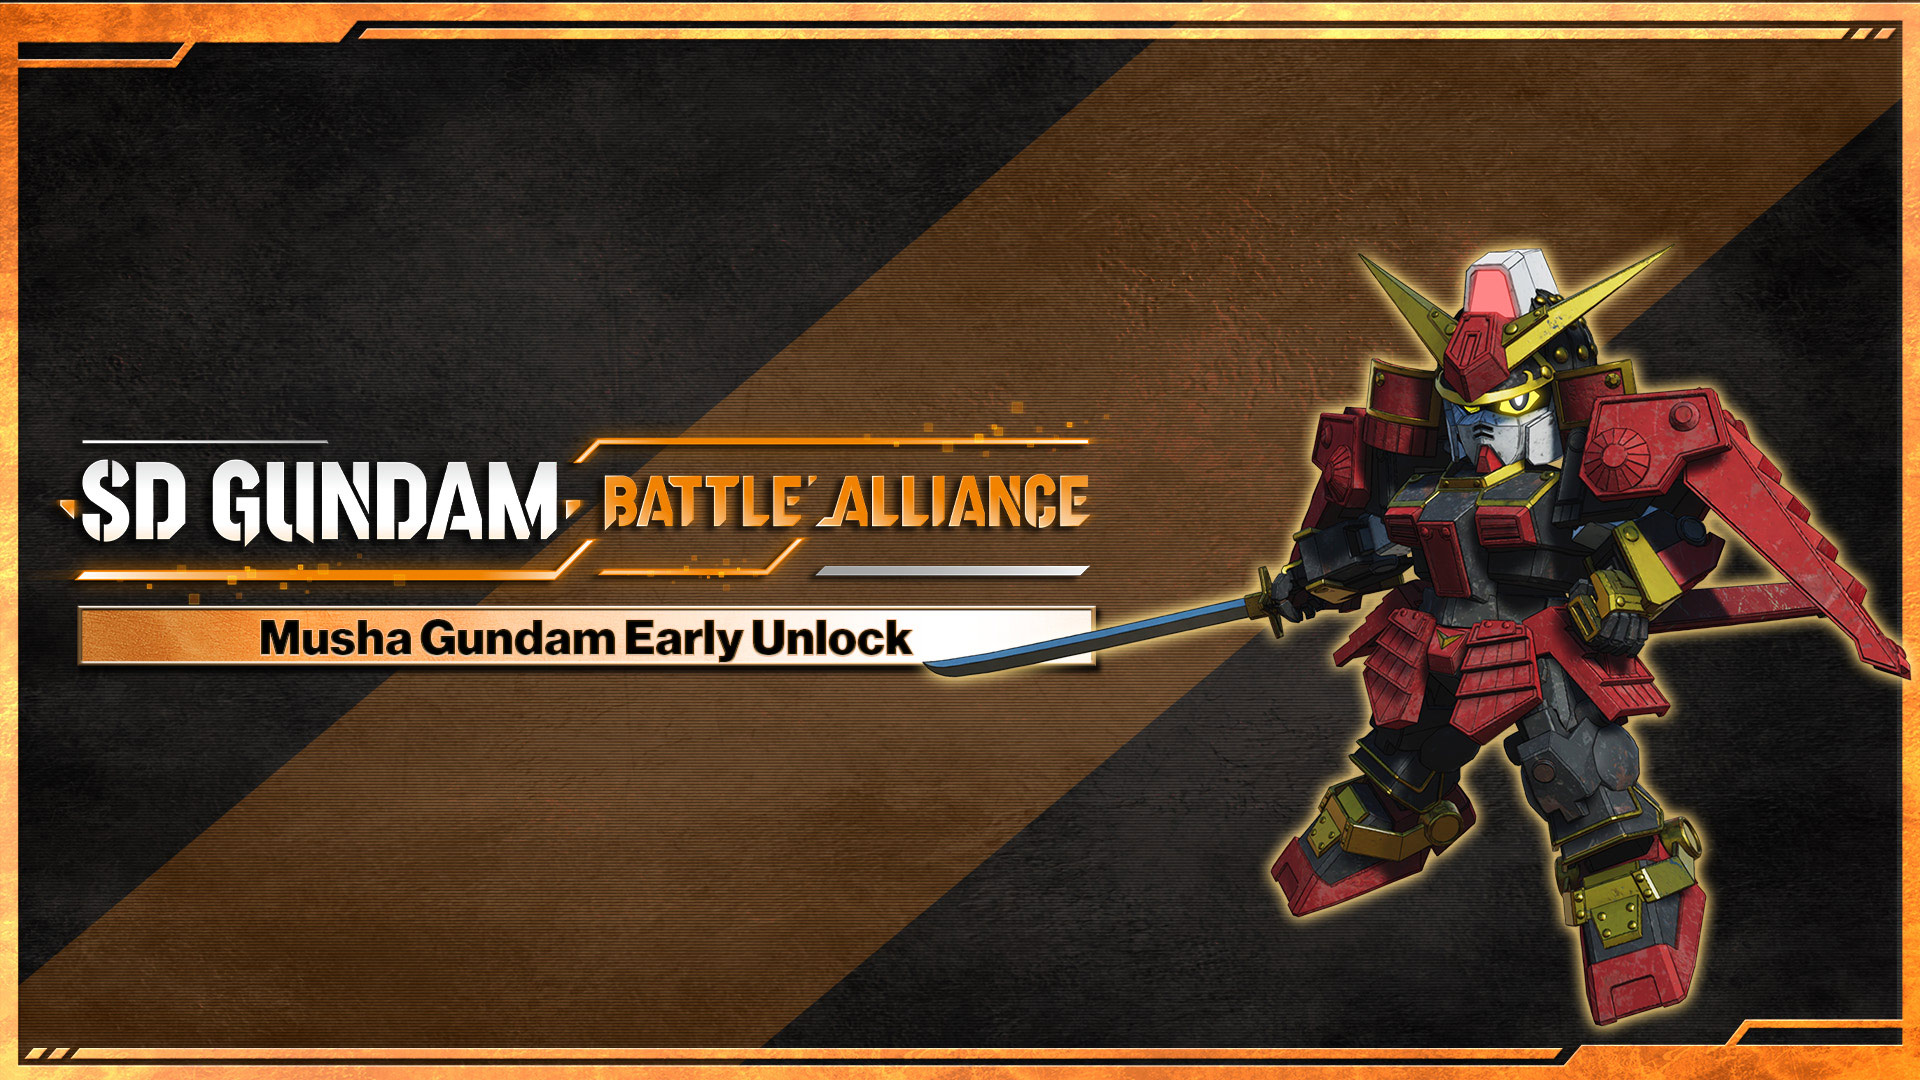 SD GUNDAM BATTLE ALLIANCE Early Unlock: Musha Gundam